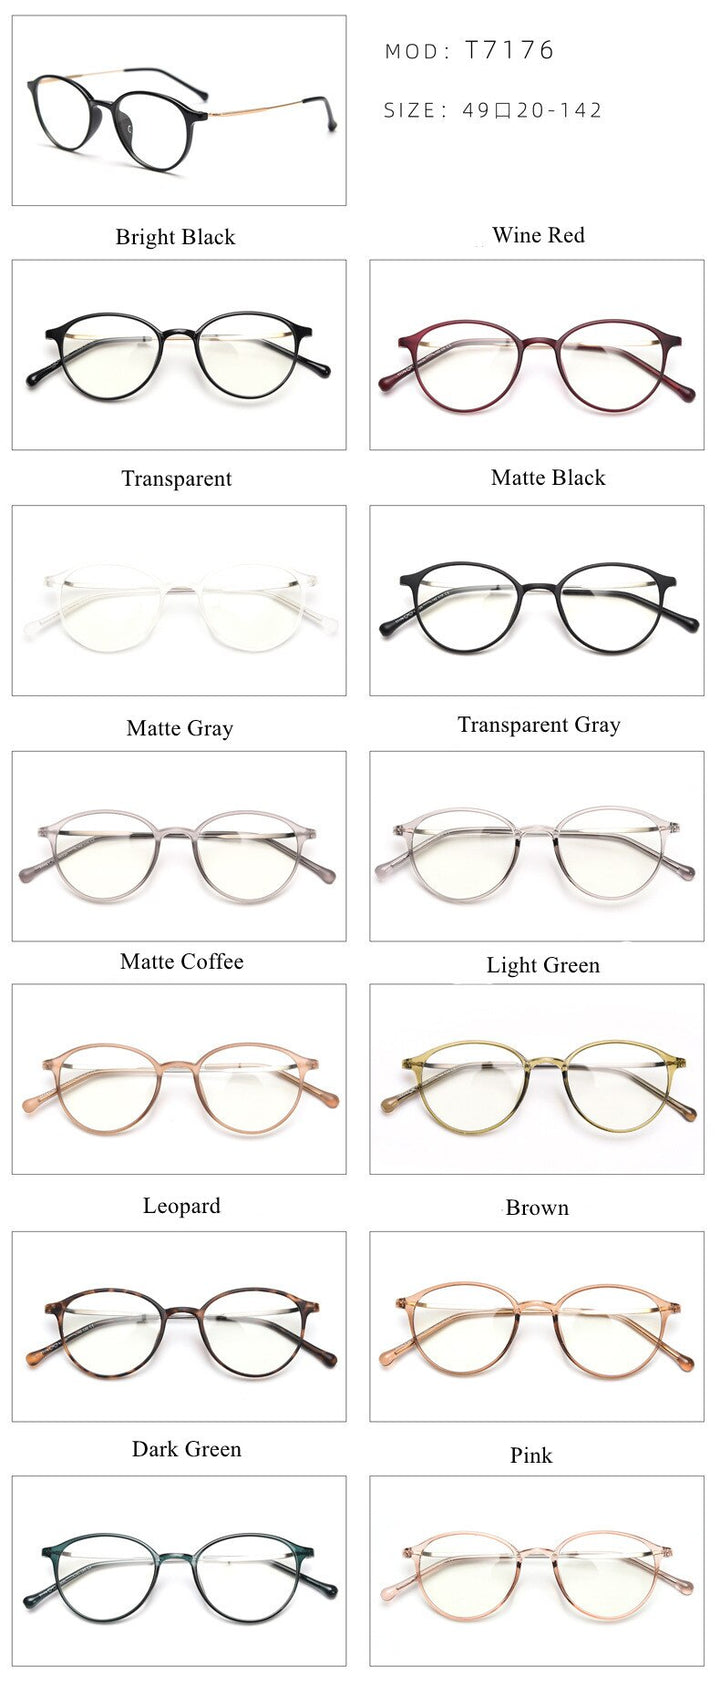 Chashma Round TR90 Eyeglasses Frame Lentes Optics Light Women Quality Student Prescription Glasses For RX Lenses Frame Chashma Ottica   